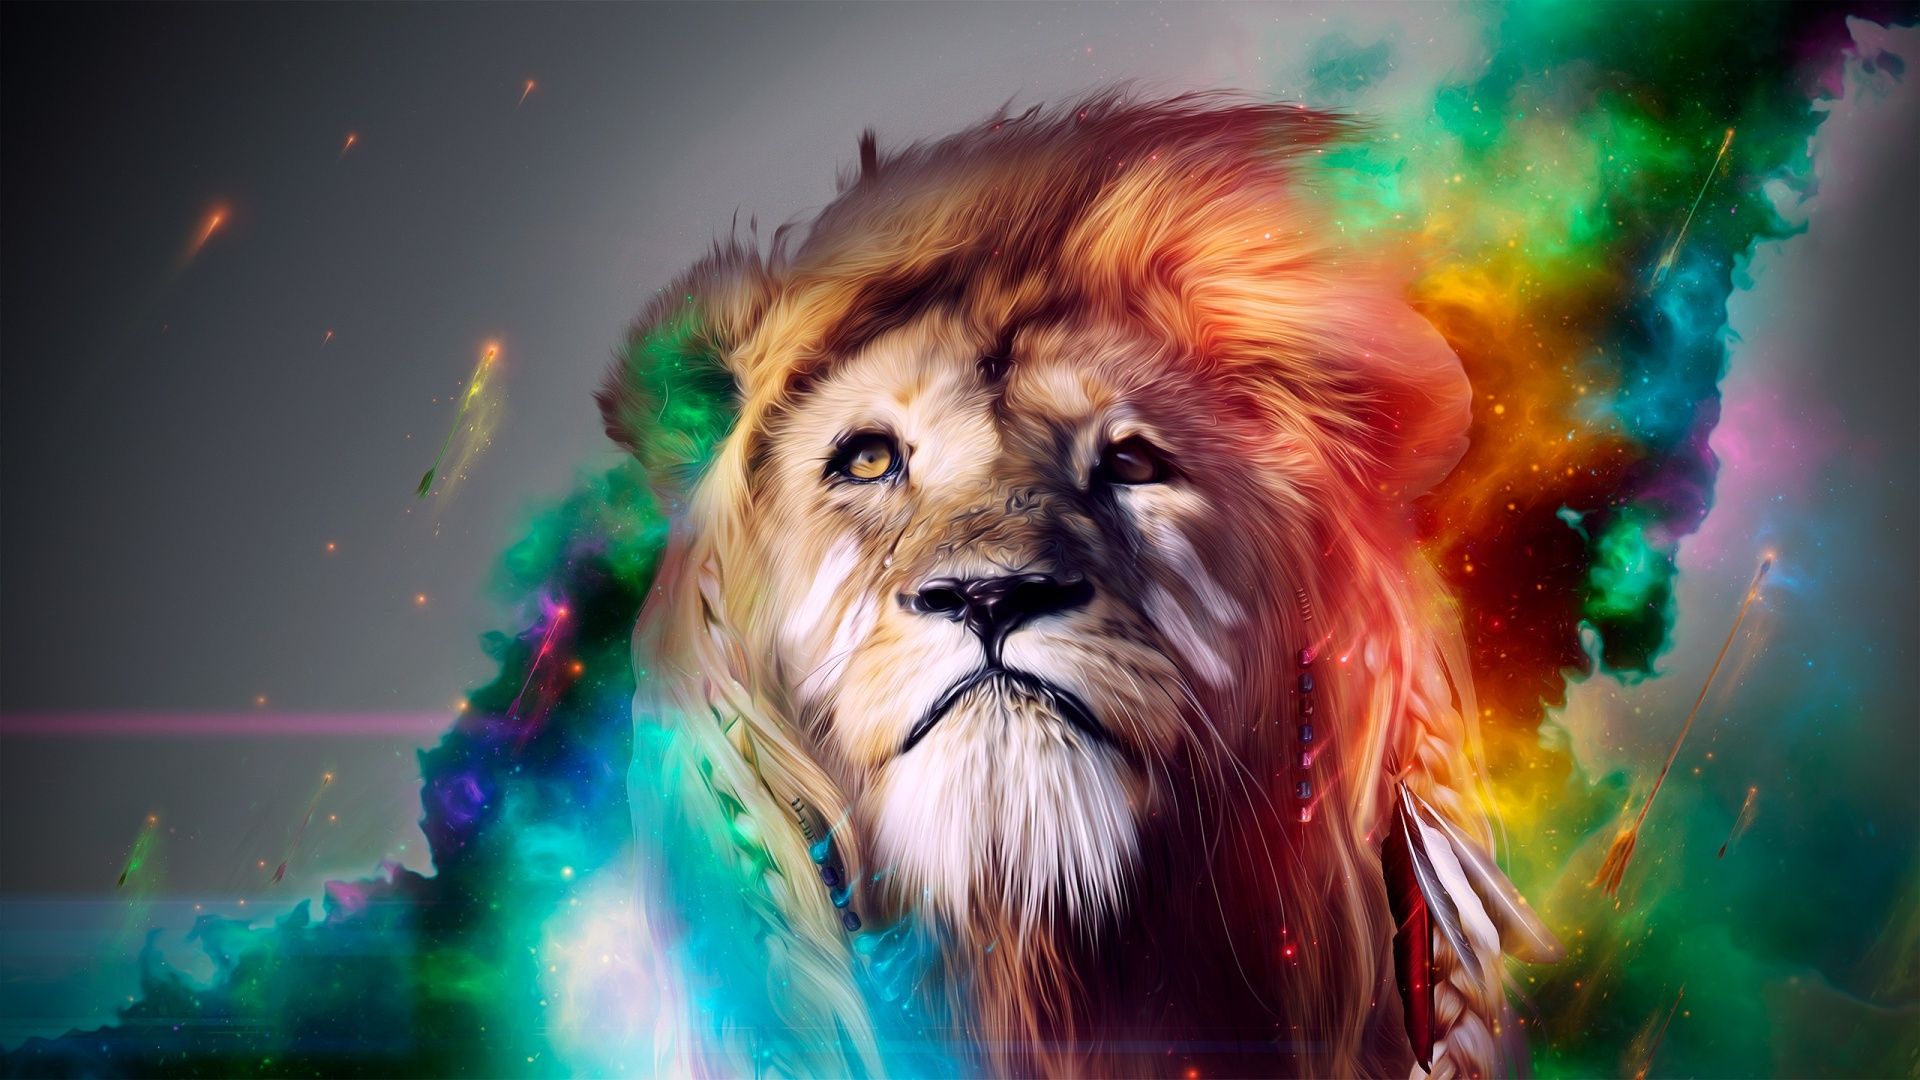 A lion with a colorful mane - Lion